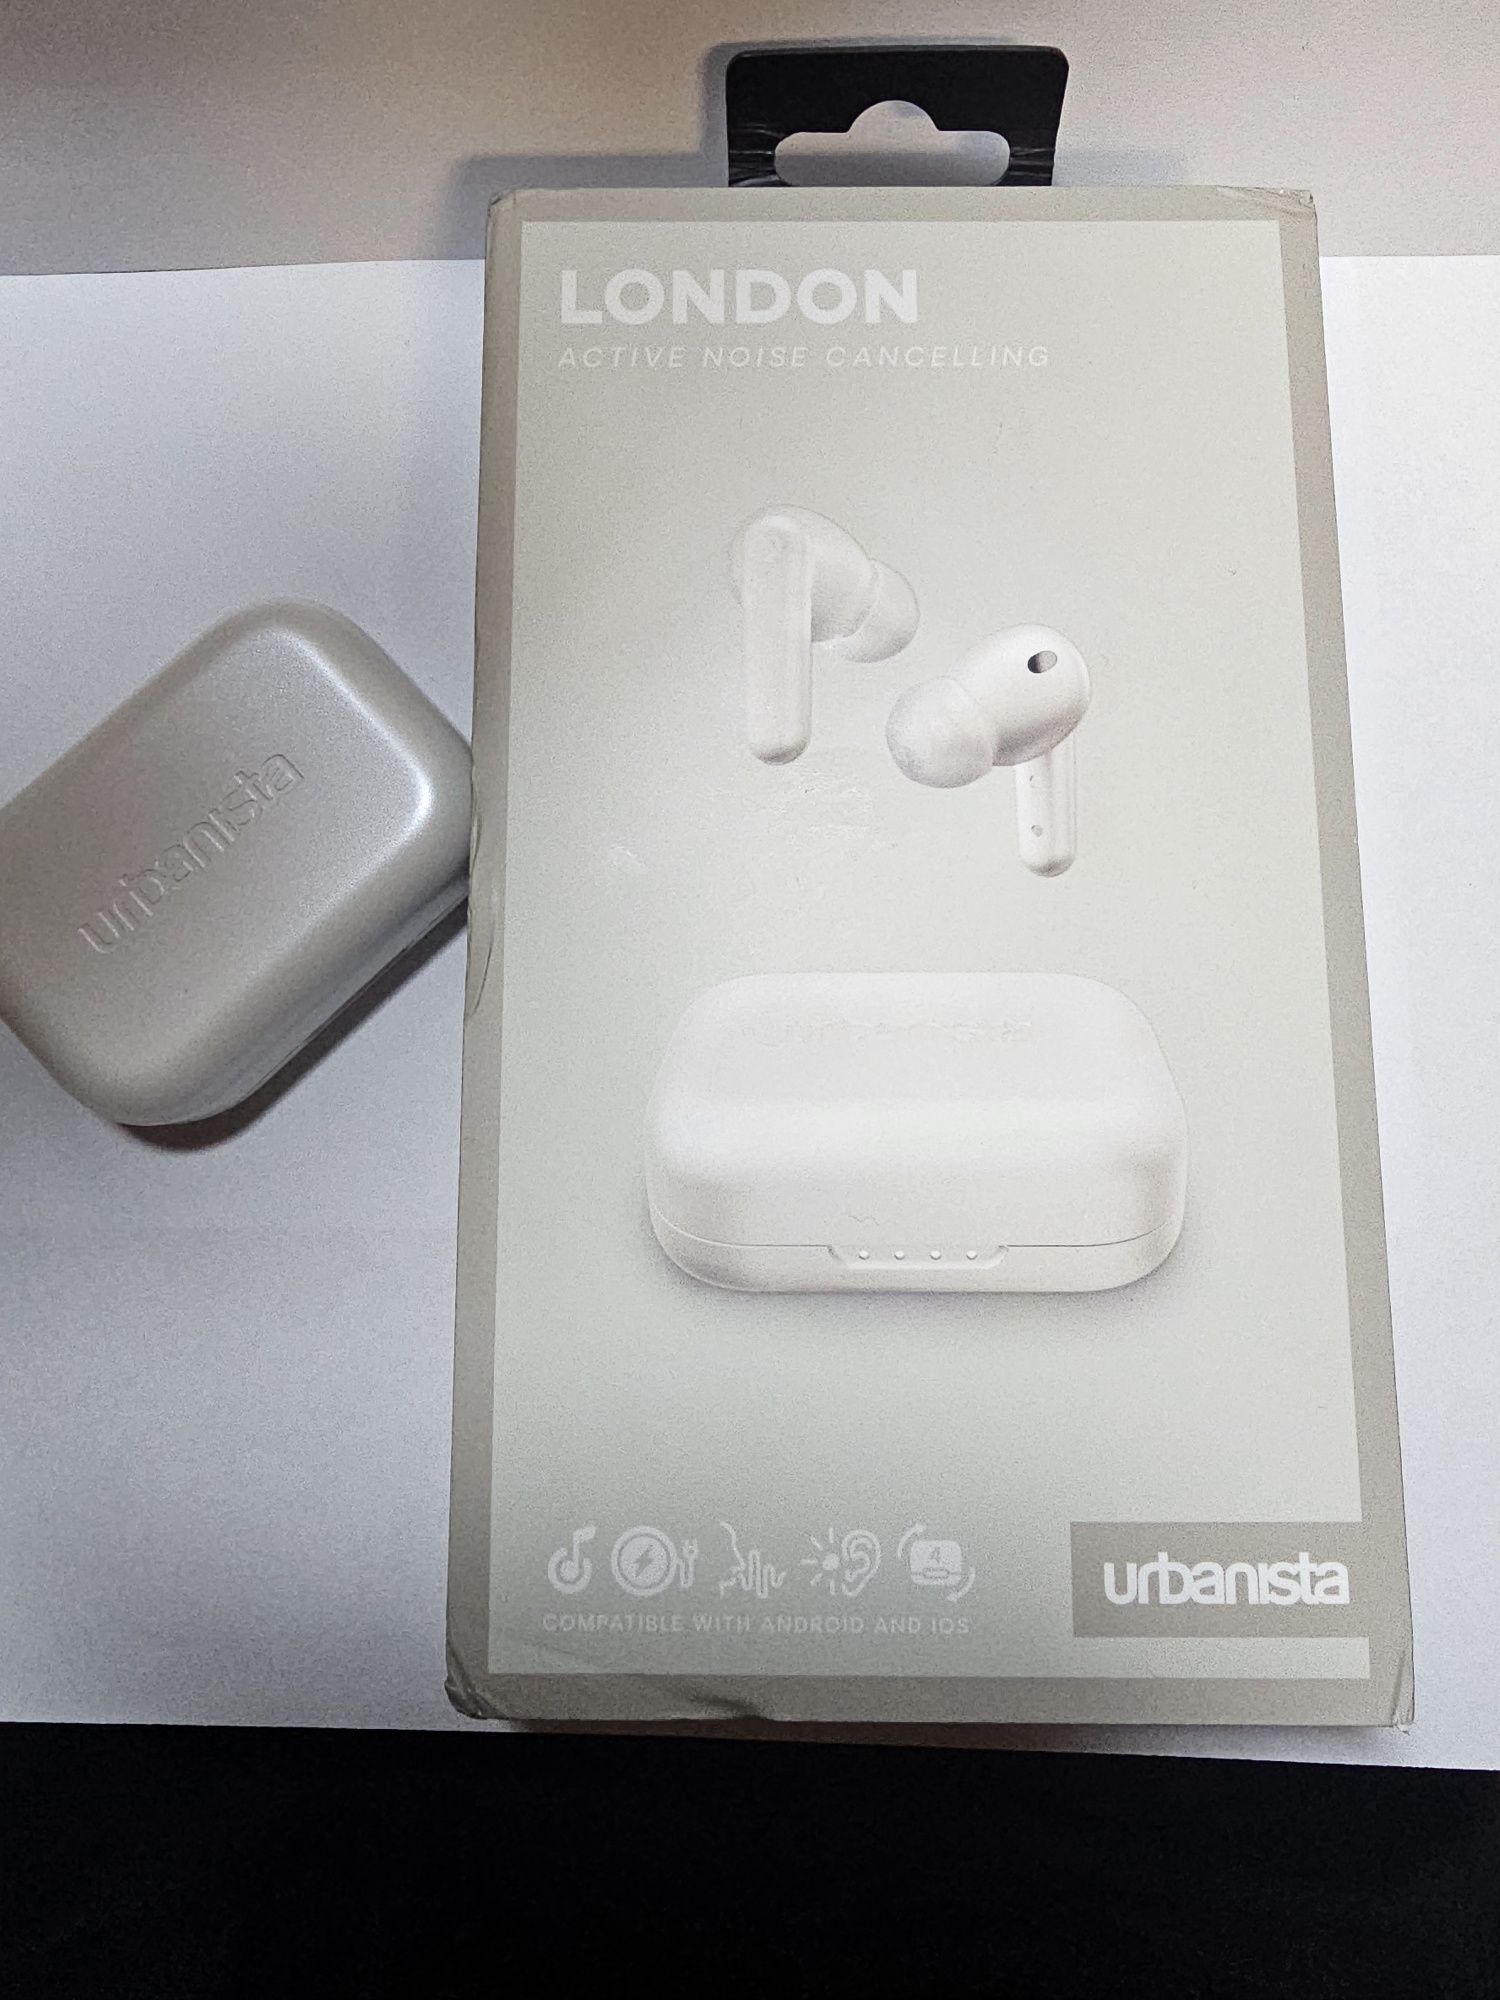 Słuchawki Bluetooth Urbanista London